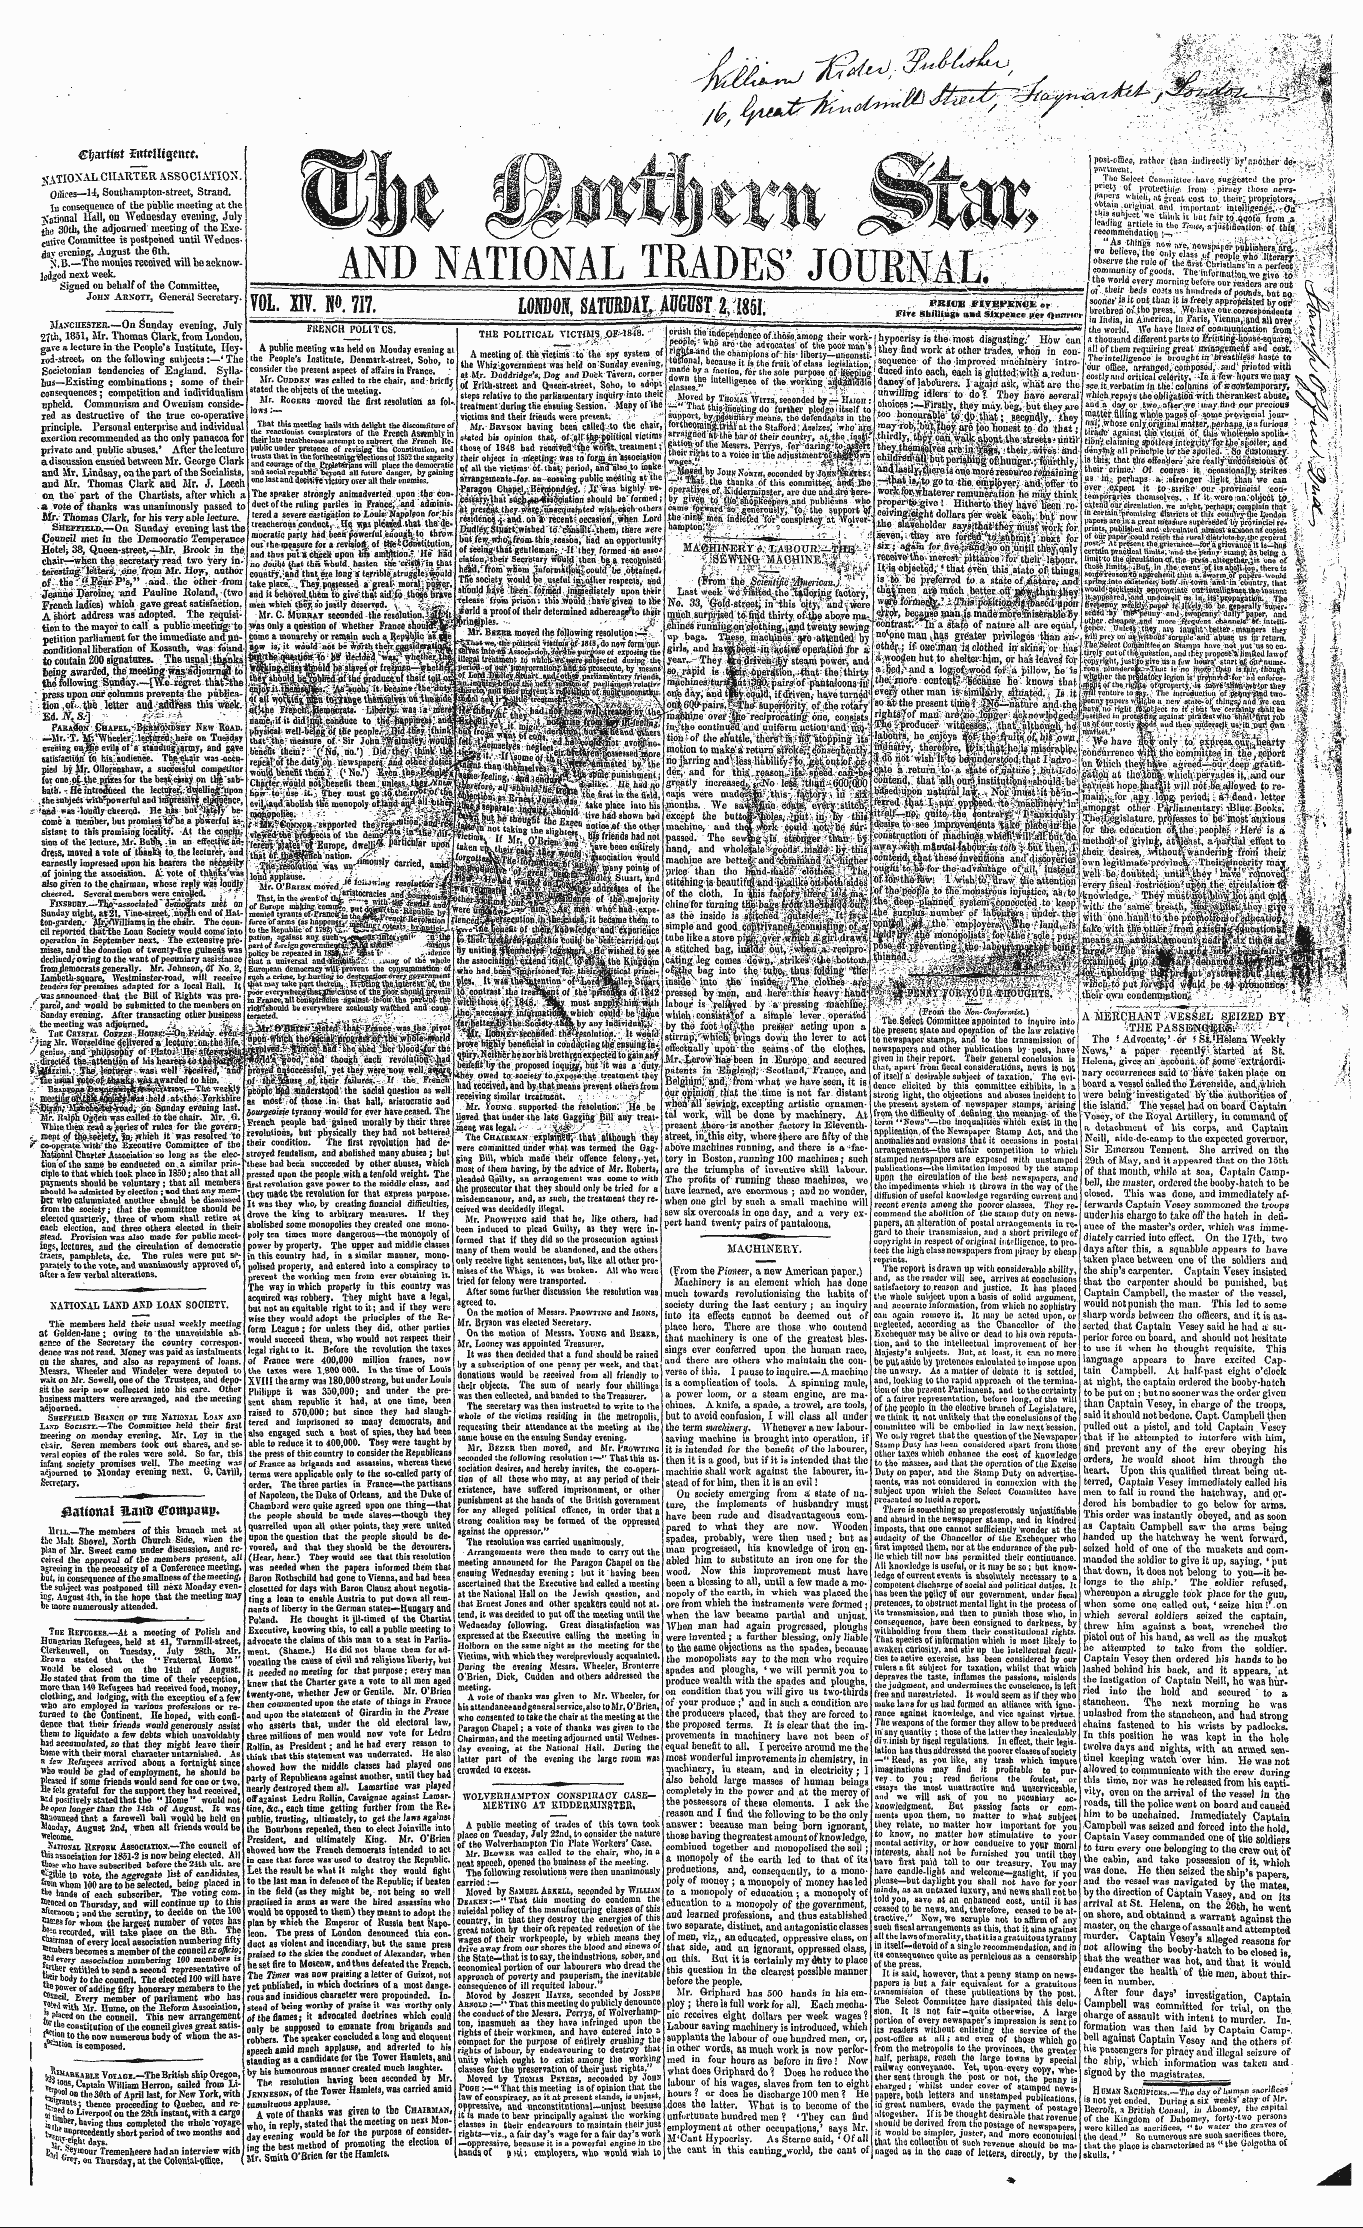 Northern Star (1837-1852): jS F Y, 2nd edition - Jiattottal Nam Comyawp*